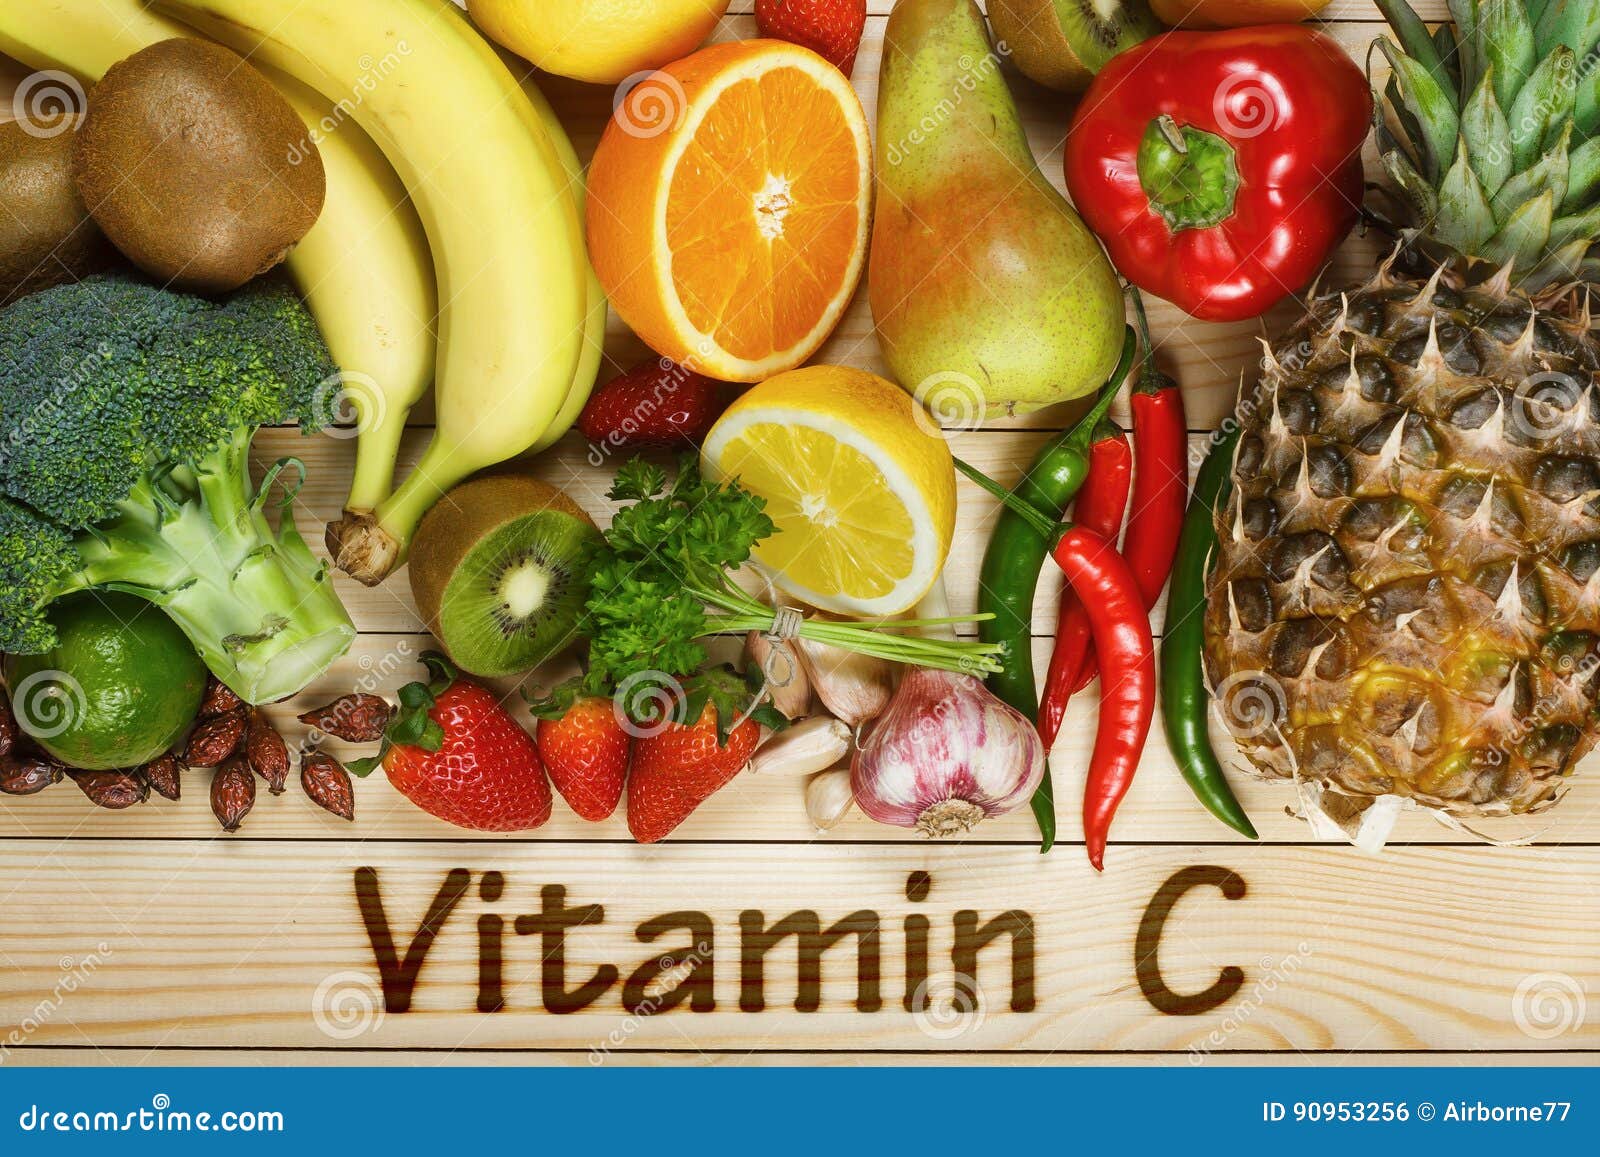 Foods rich in vitamin C stock photo. Image of orange - 90953256